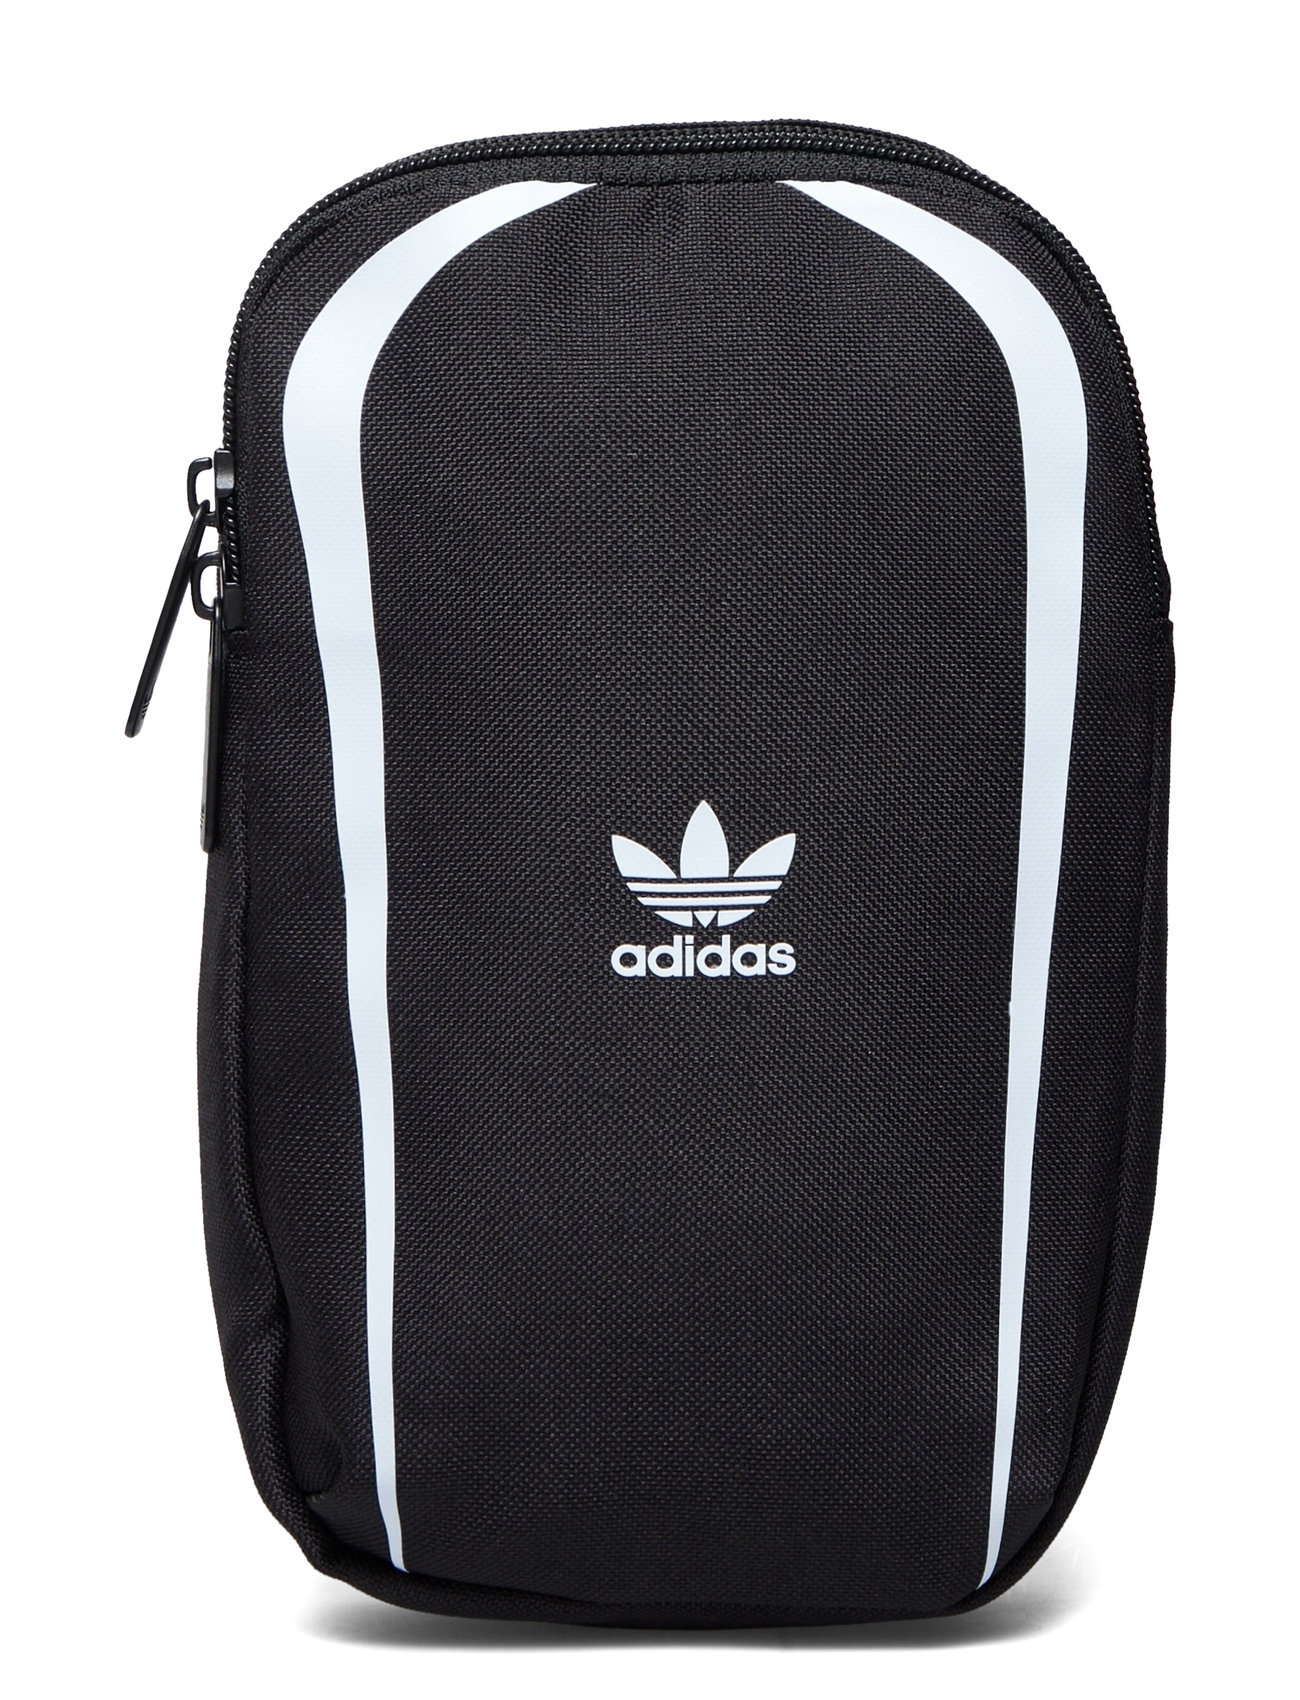 Small Item Bag Sport Bum Bags Black Adidas Originals